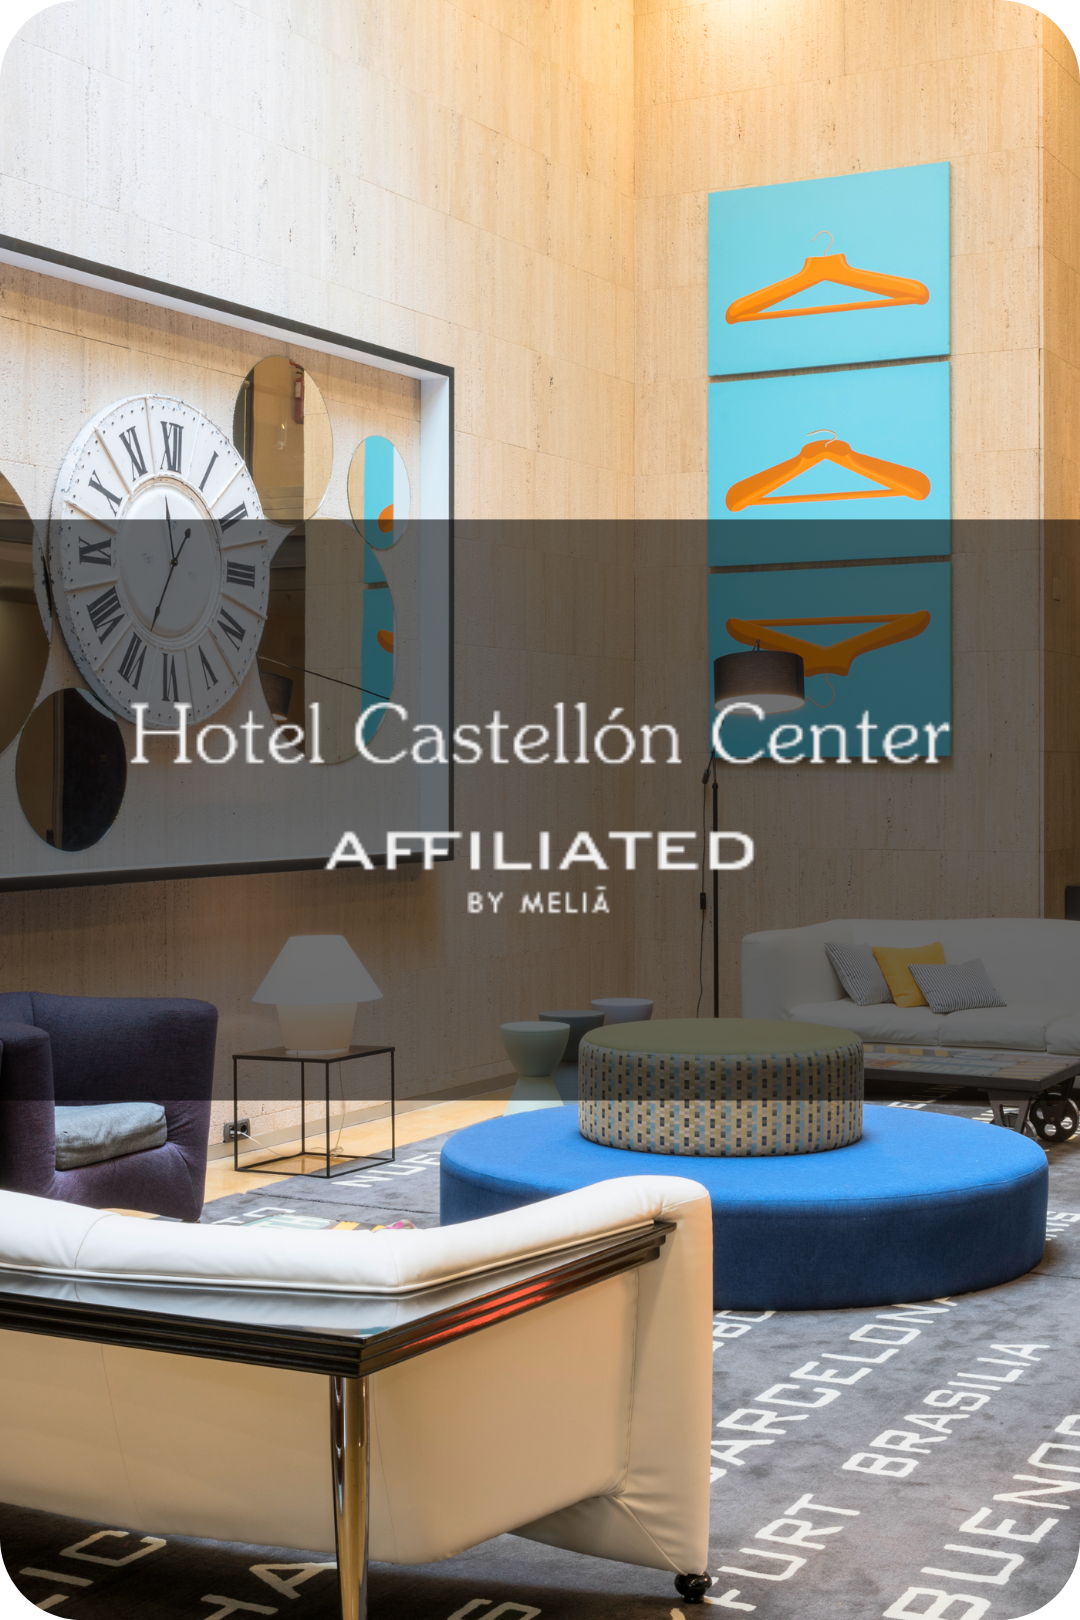 HOTEL CASTELLON CENTER